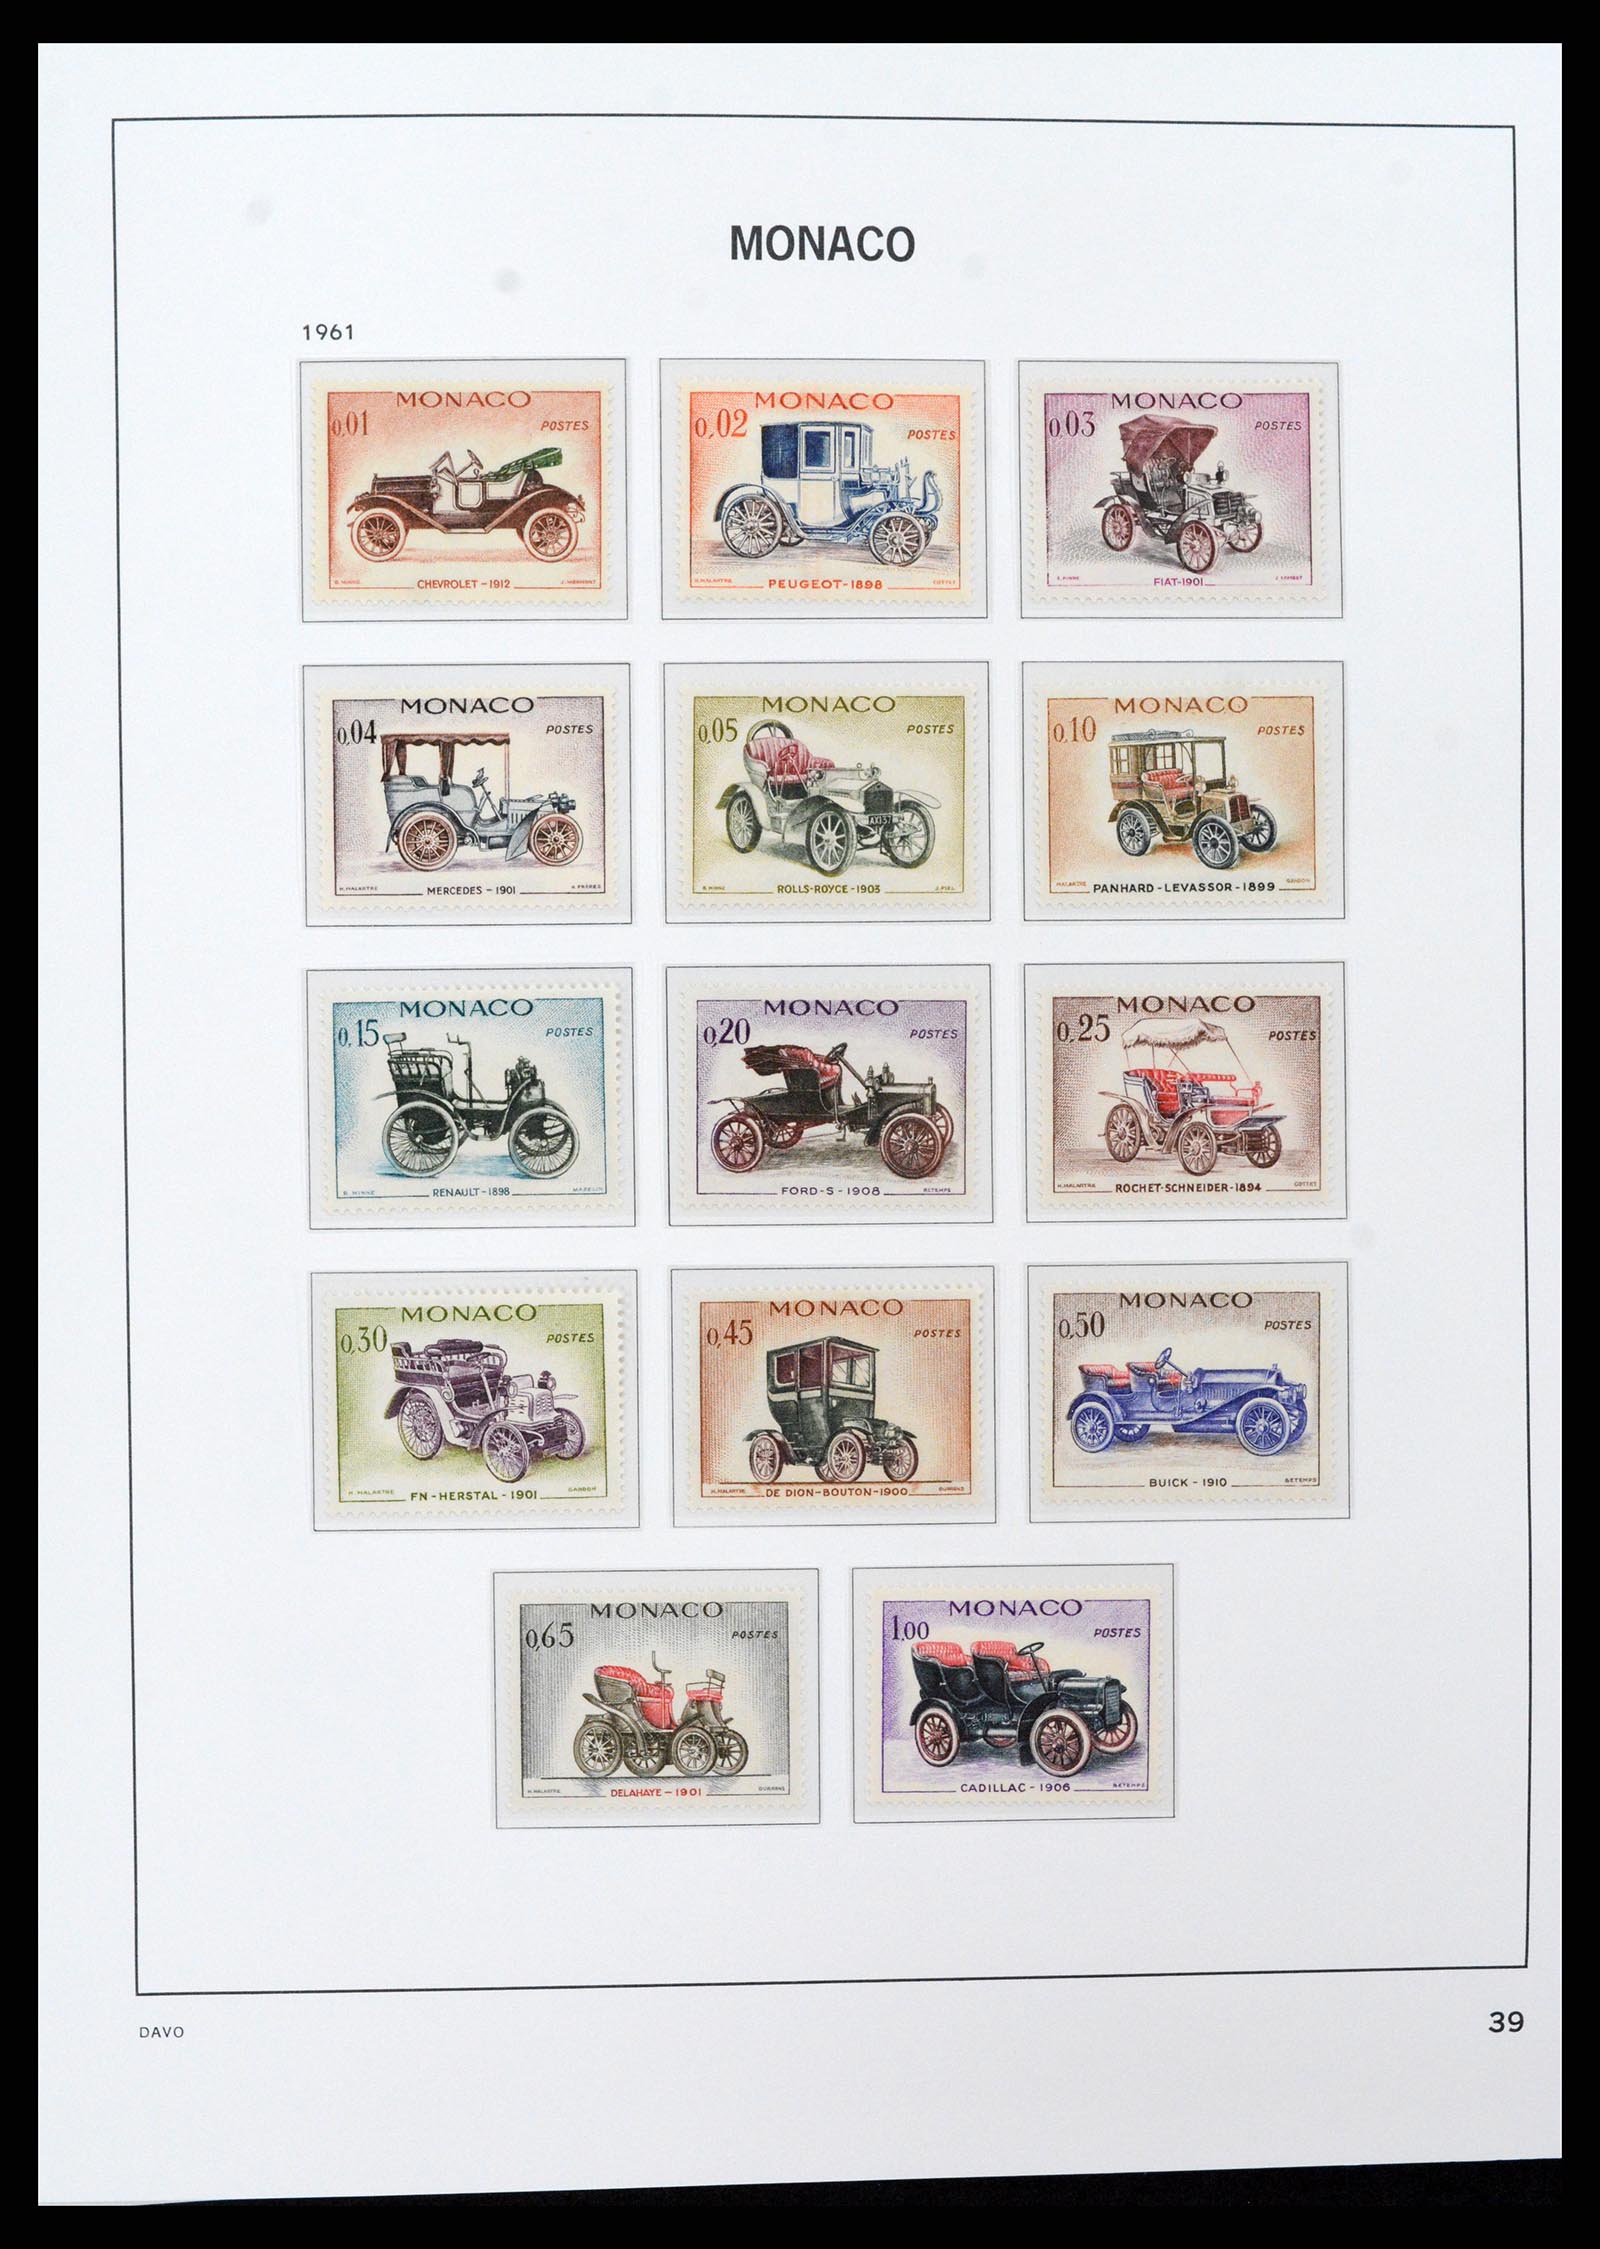 37279 039 - Stamp collection 37279 Monaco 1885-1969.